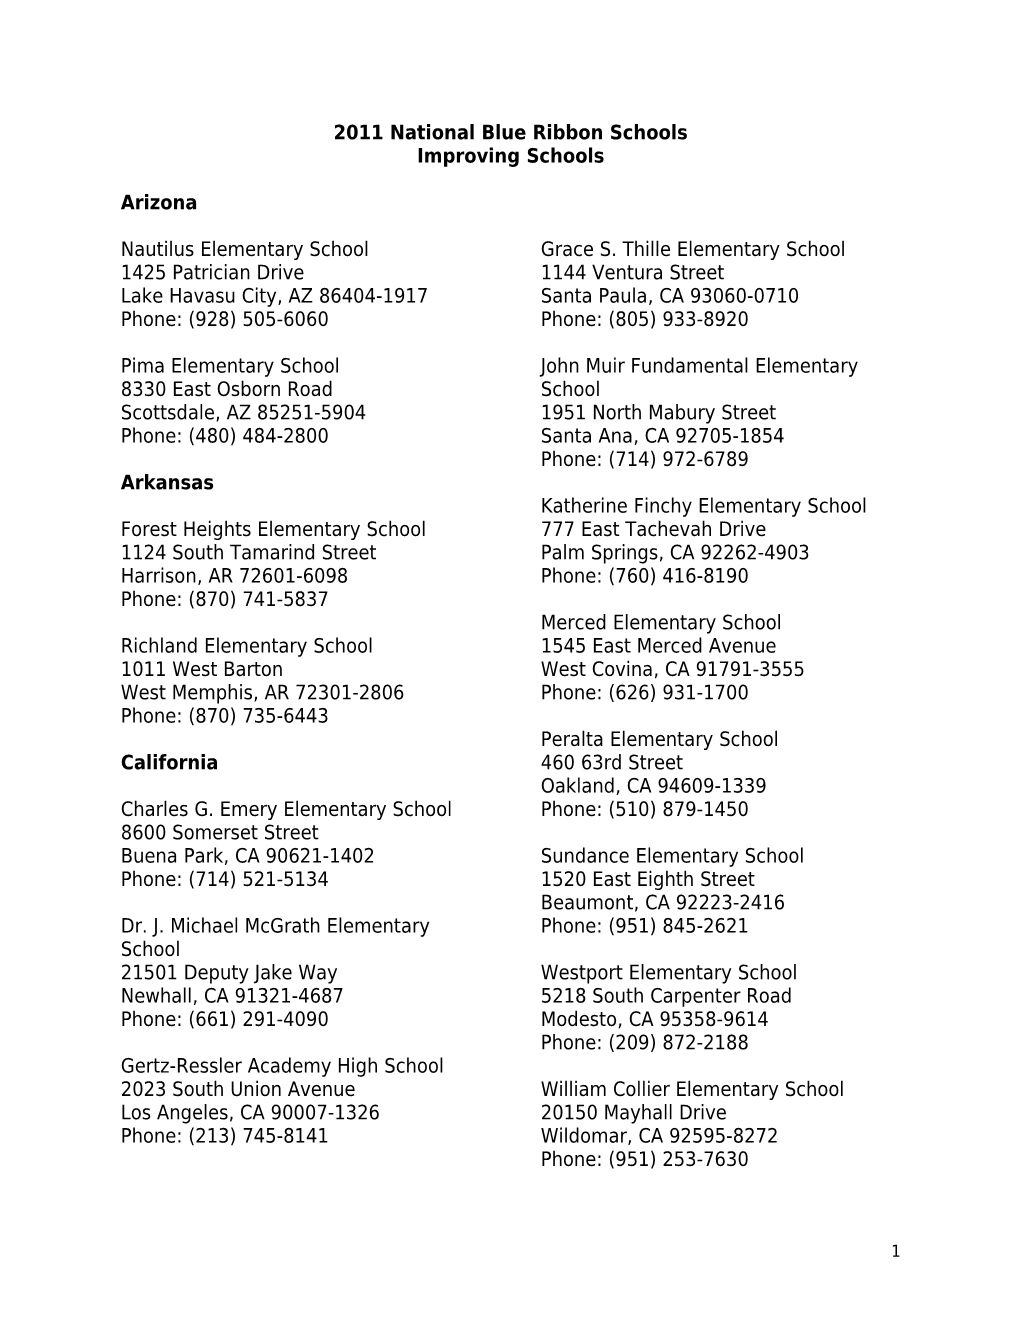 2011 Blue Ribbon Public Schools, Category: Improving Schools October 14, 2011 (Msword)